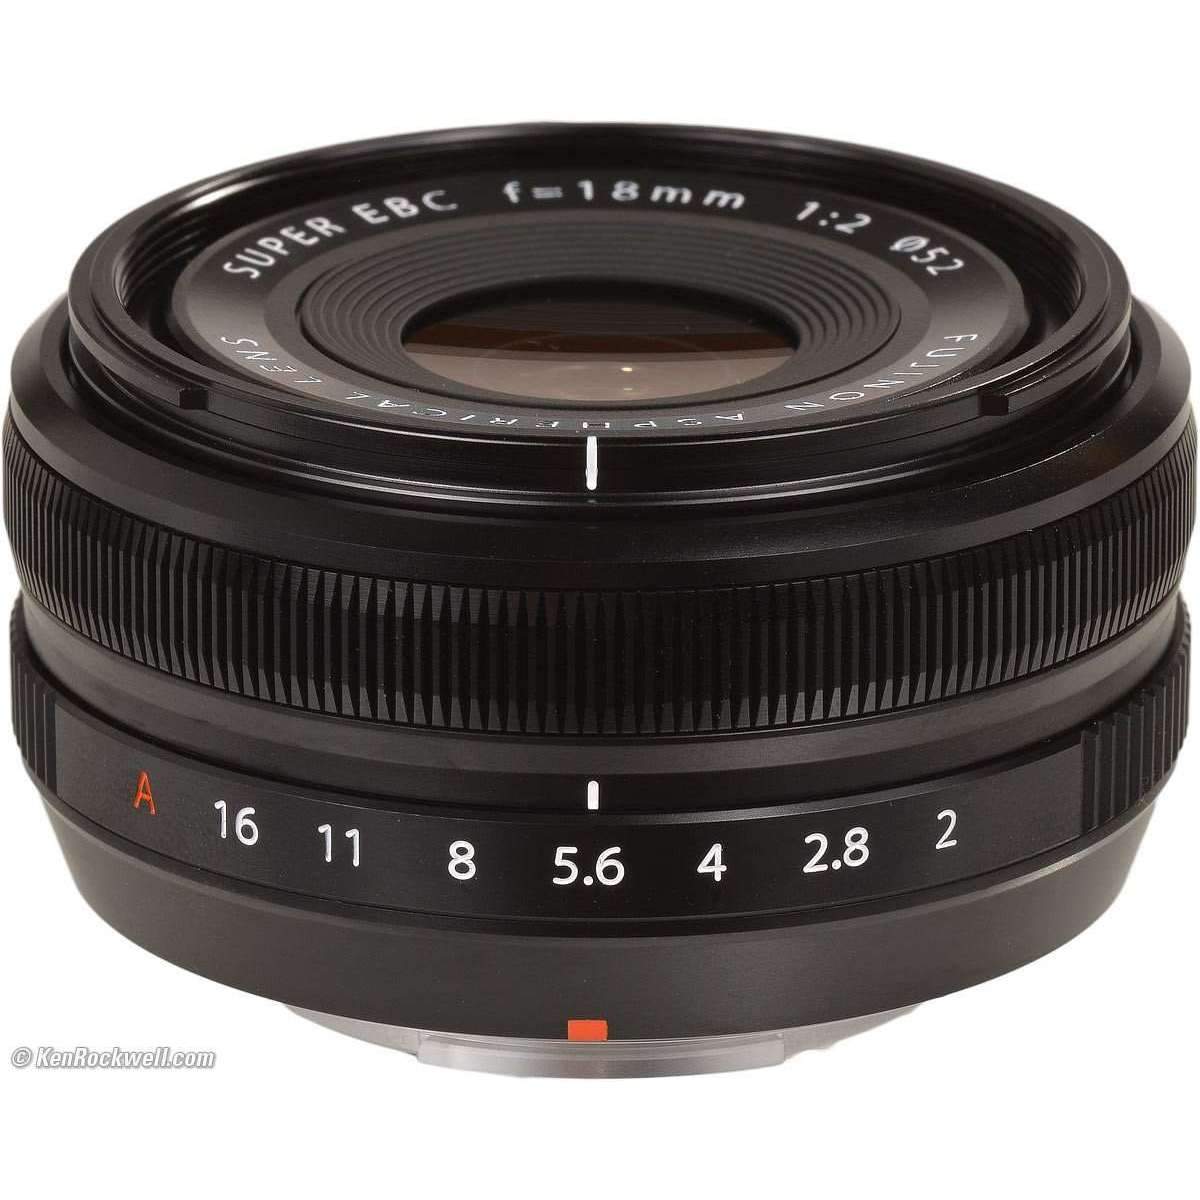 FUJIFILM XF 18mm f/2 R Fujifilm Lens - Mirrorless Fixed Focal Length